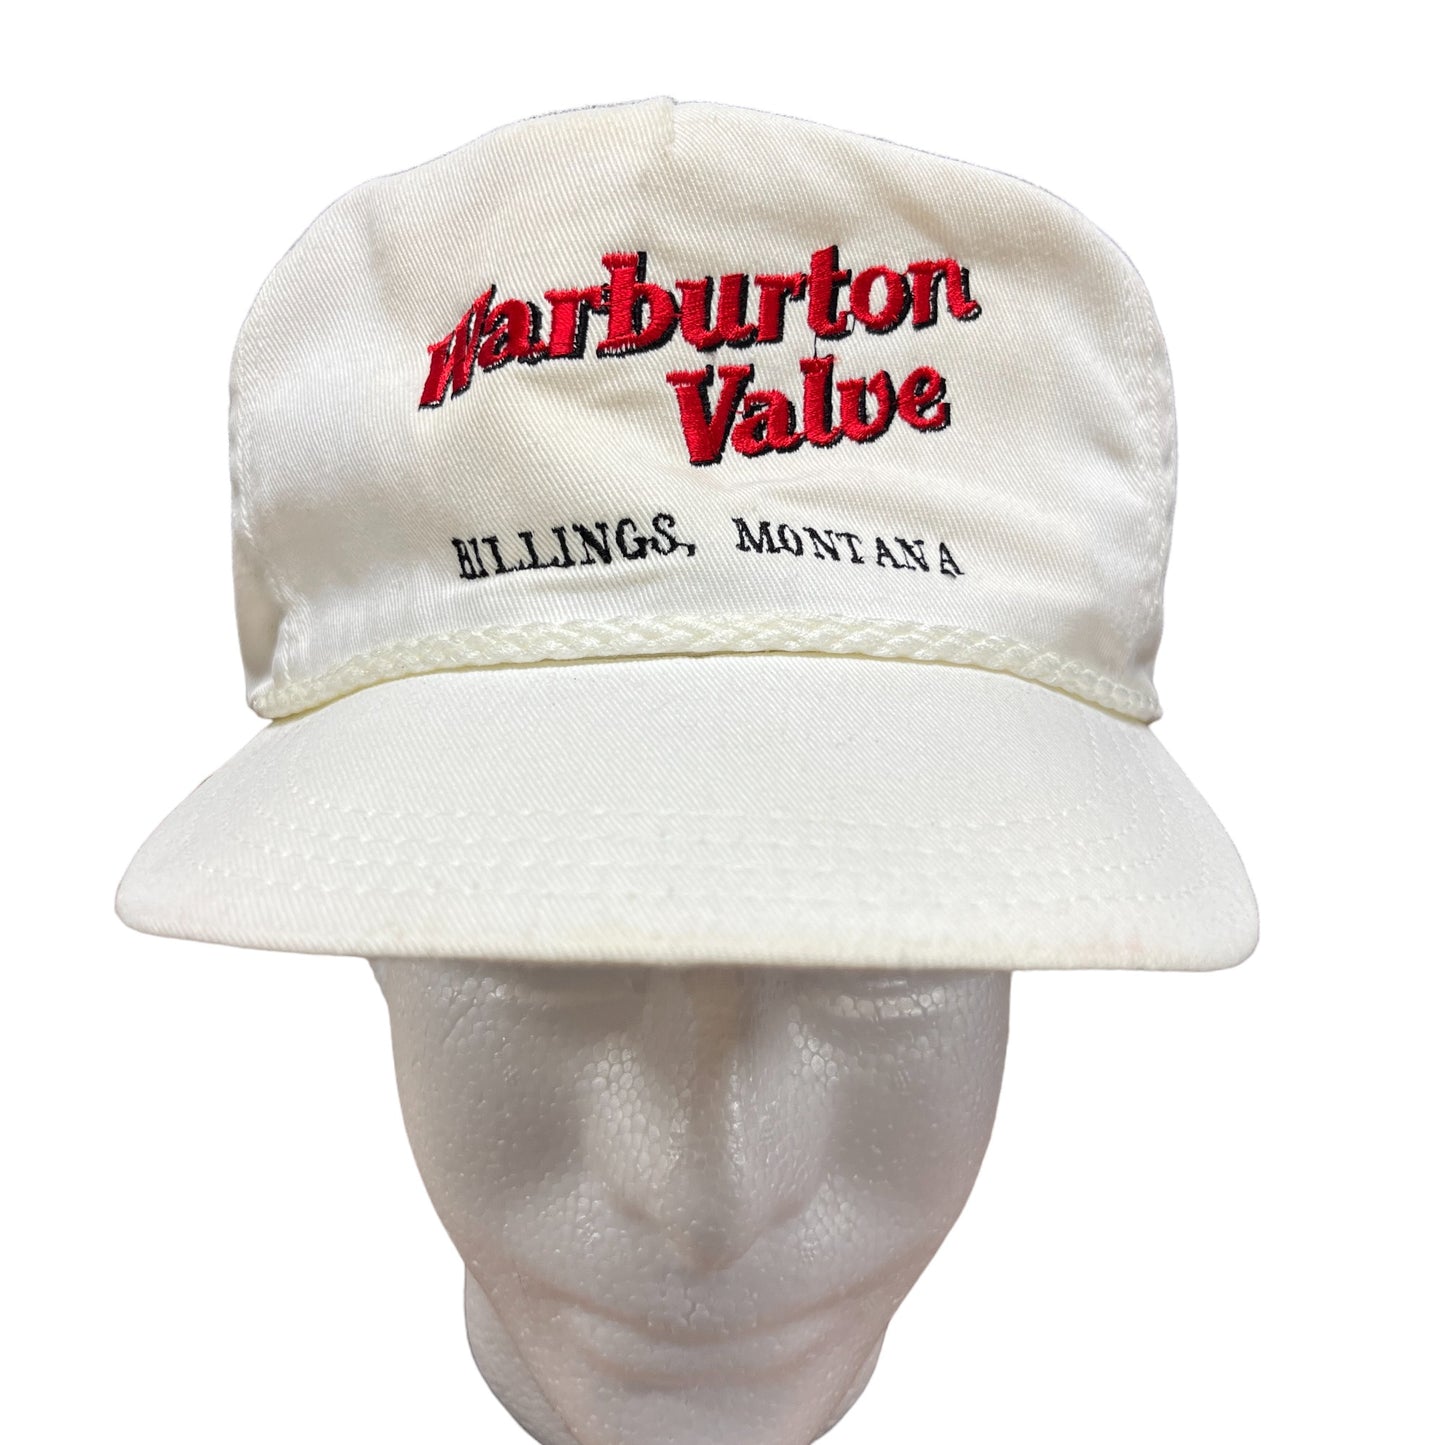 Vintage 80's Billings Montana Walburton Value Grocery Strapback Hat